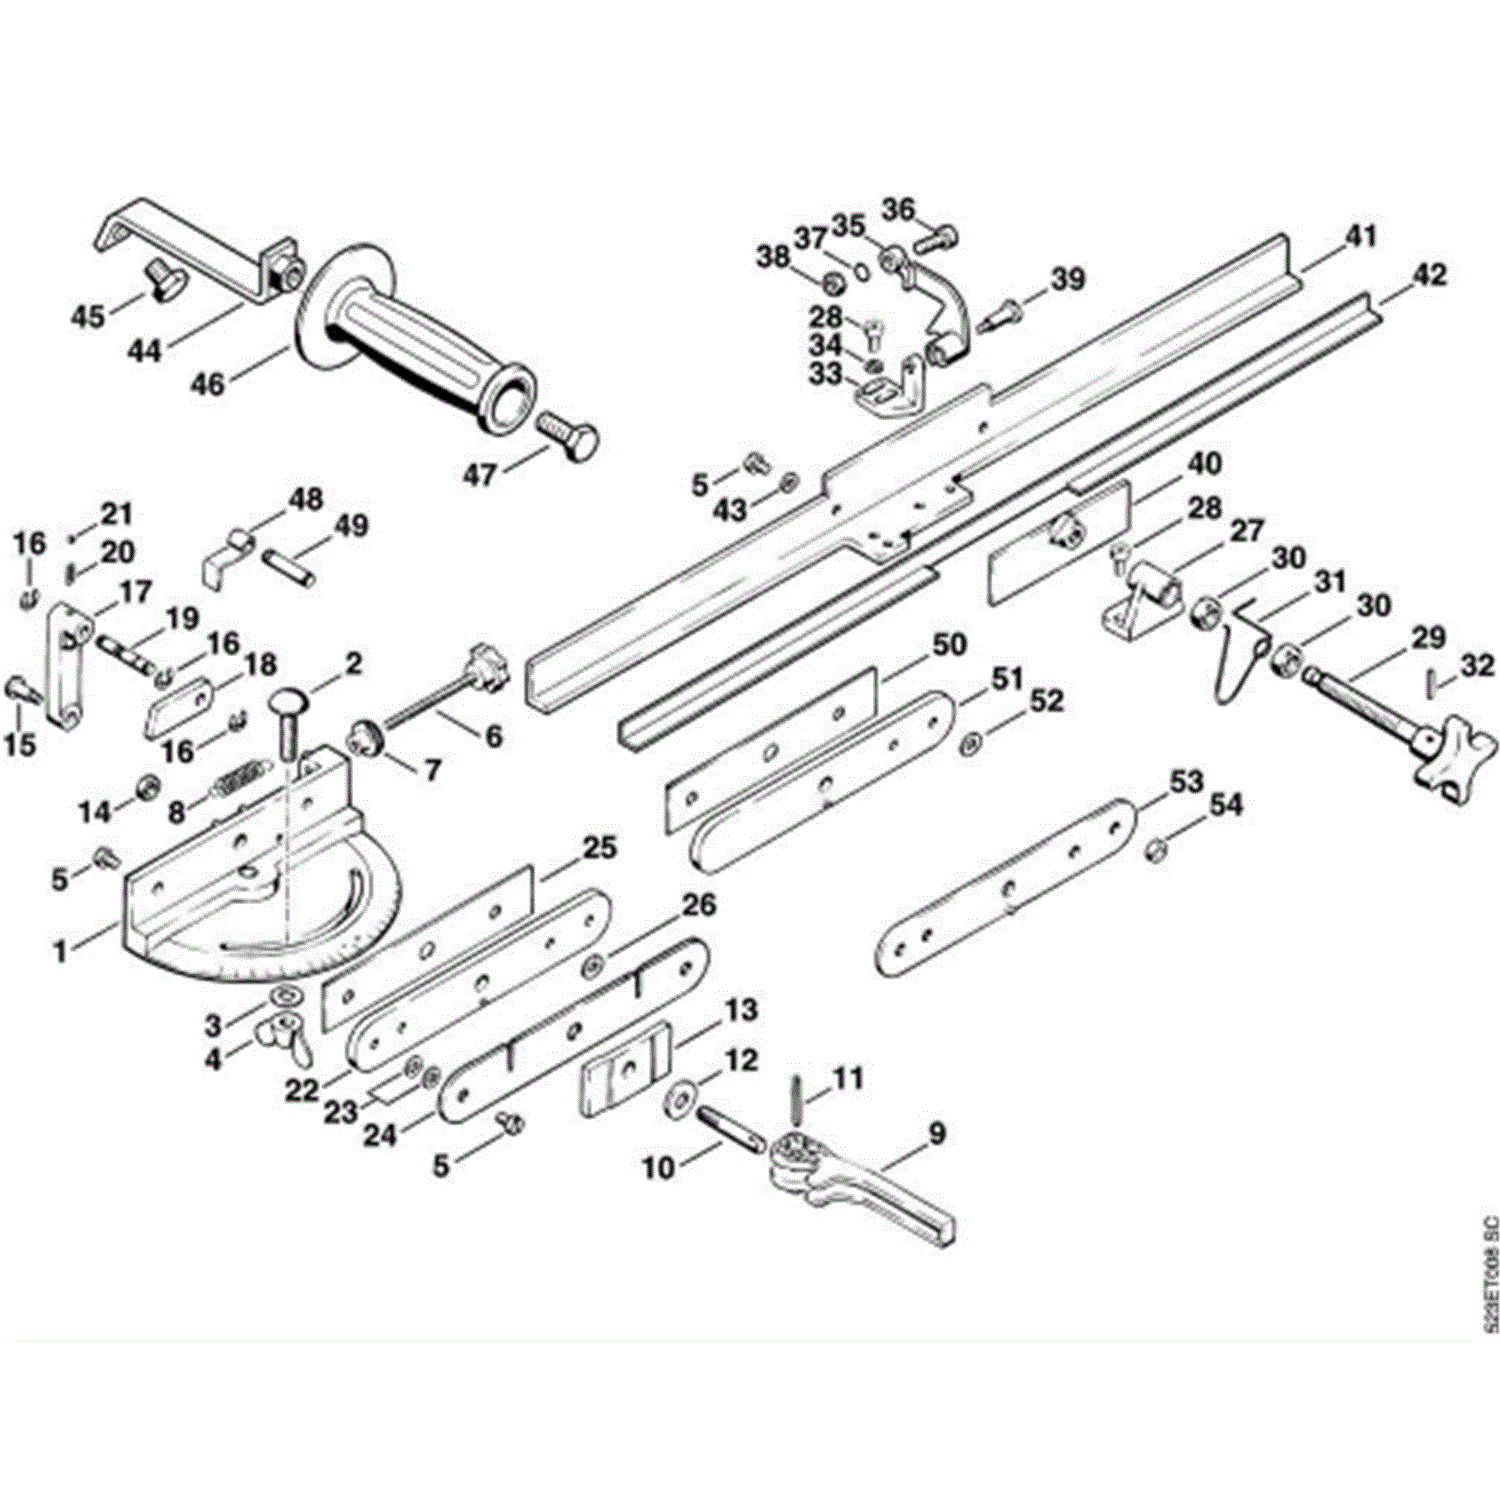 Stihl USG Sharpener (USG) Parts Diagram, E-Swiveling supports